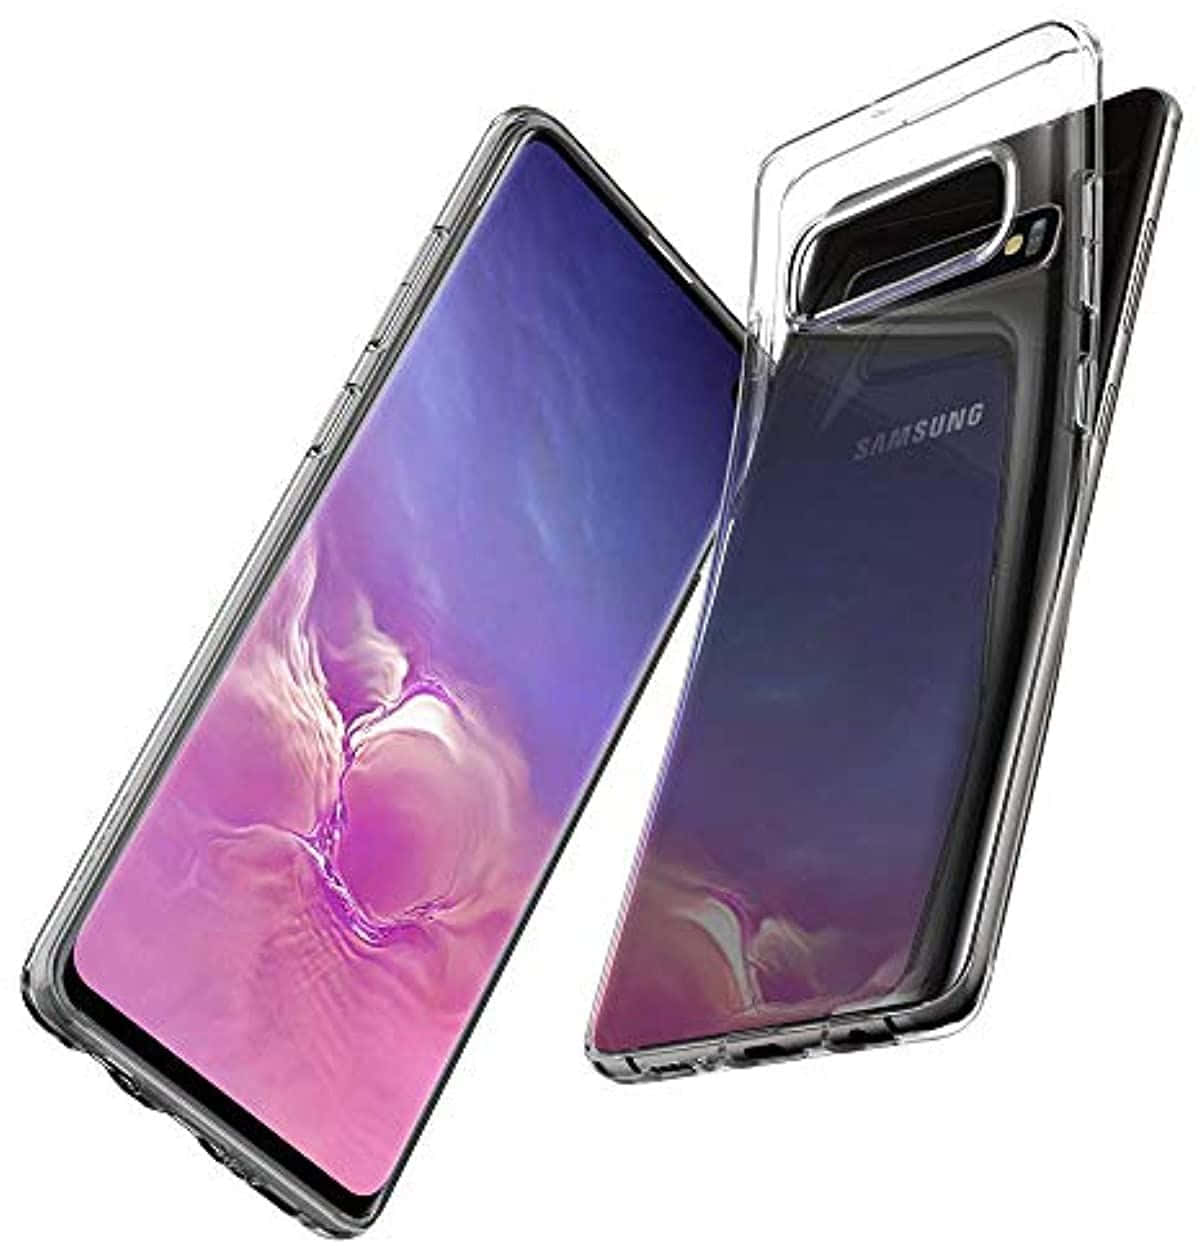 Ottieniil Samsung Galaxy S10 Con Tecnologia All'avanguardia.